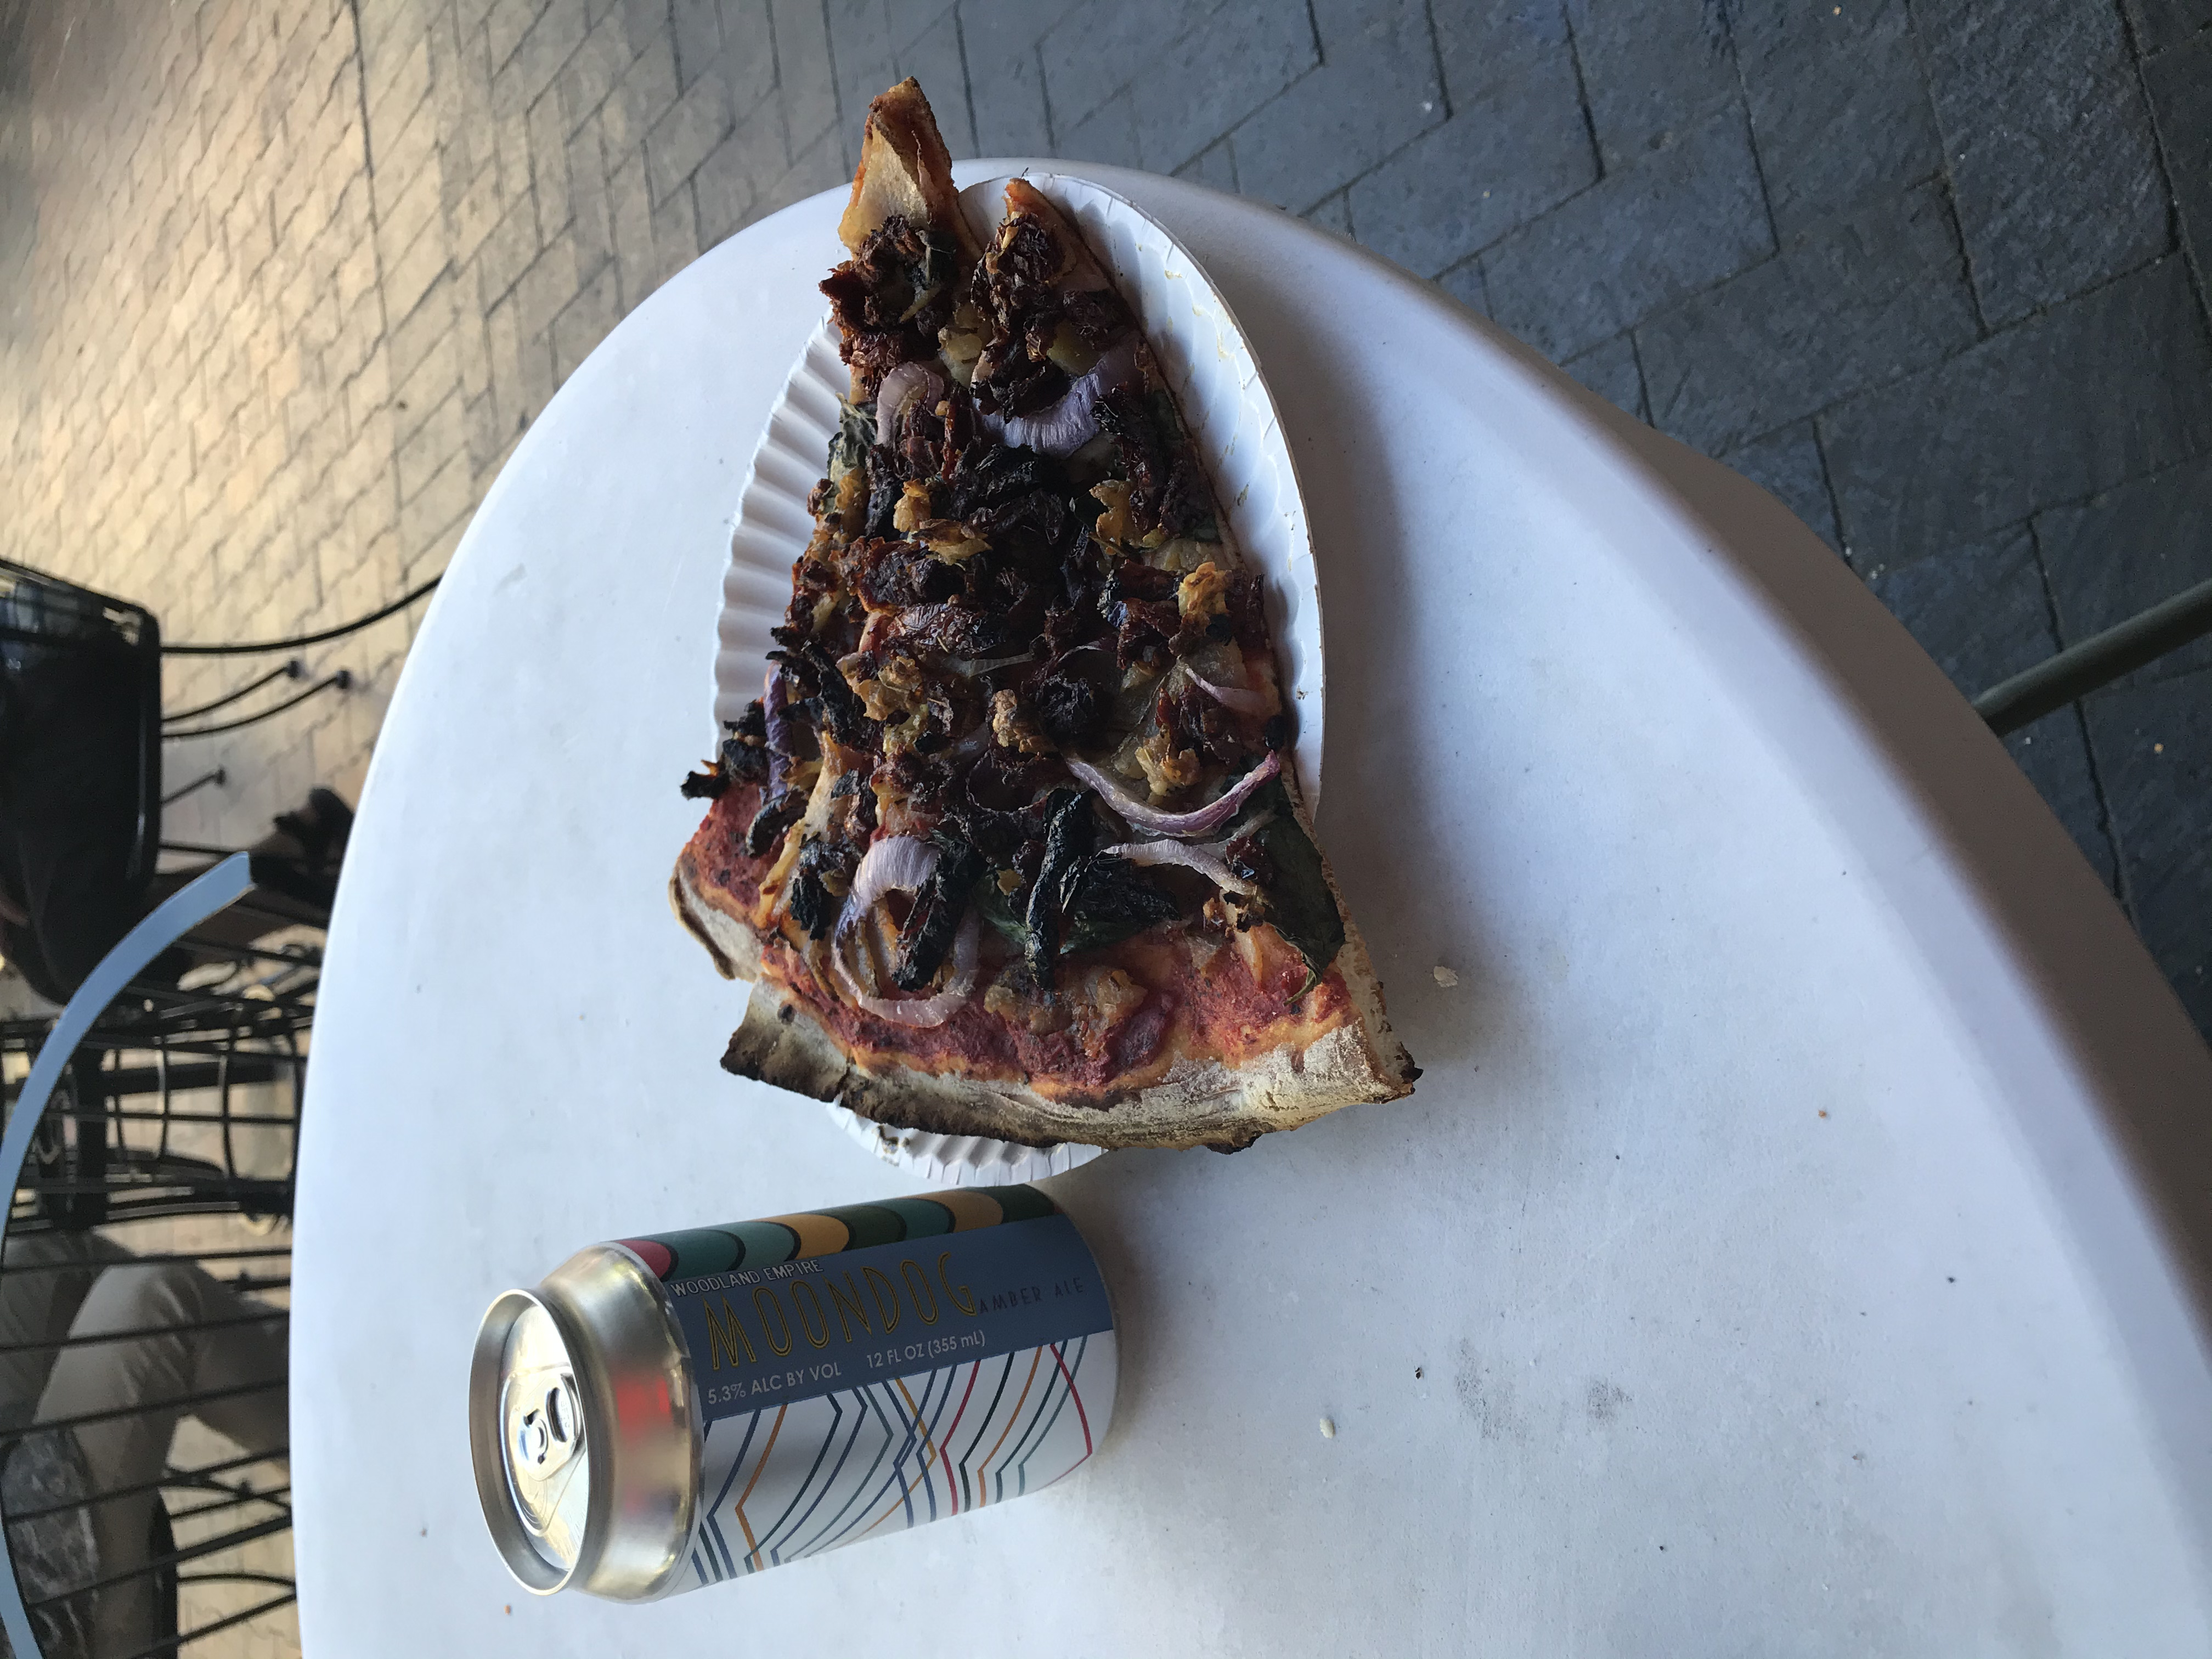 Vegan Pizza and Moondog microbrew at Piehole in Boise, Idaho